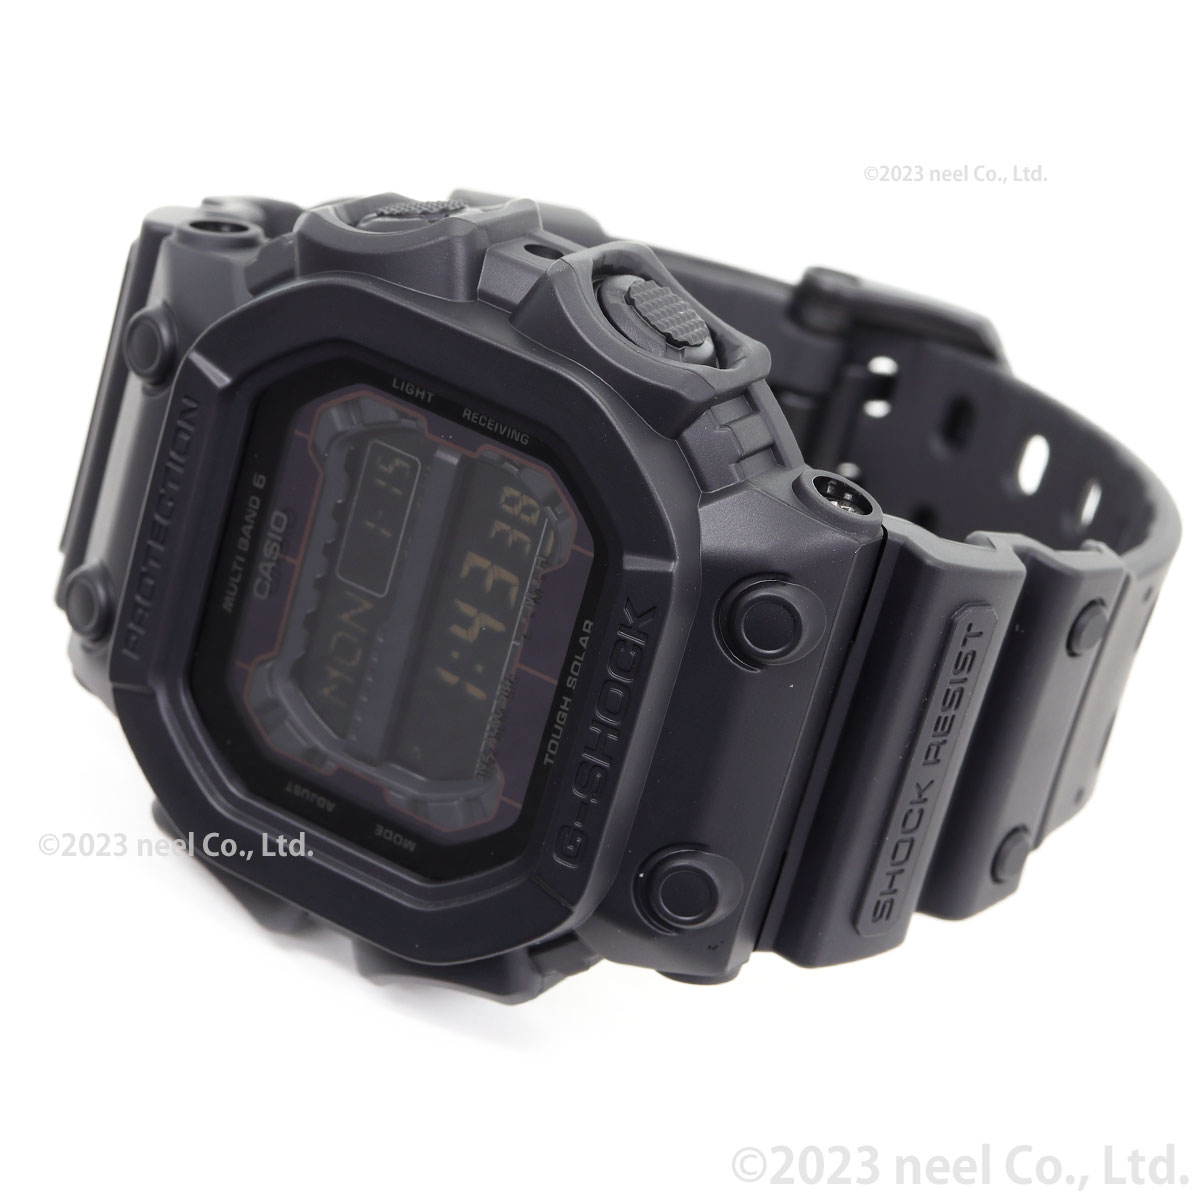 Gショック G-SHOCK 電波ソーラー 腕時計 メンズ 黒 ブラック GXW-56BB-1JF ジーショック